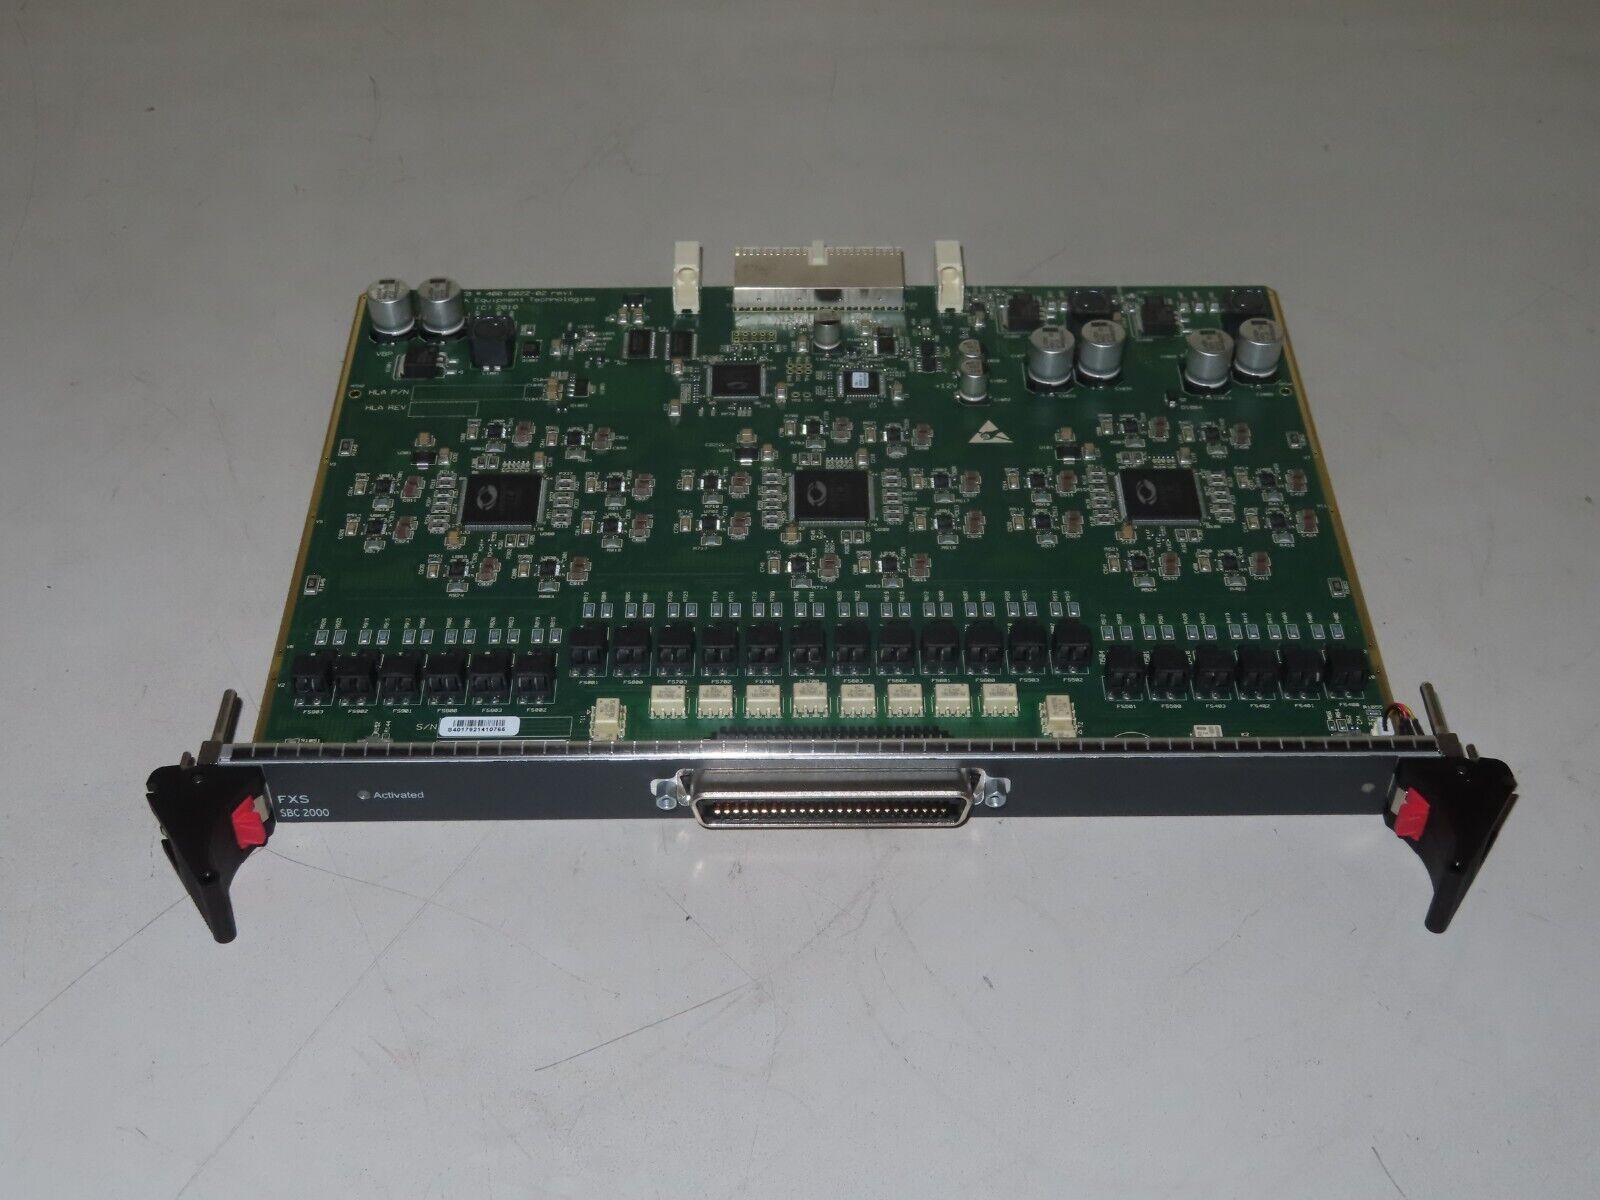 Sonus Ribbon SBC 2000 FXS Interface Card comprises 24 FXS interfaces RJ-21